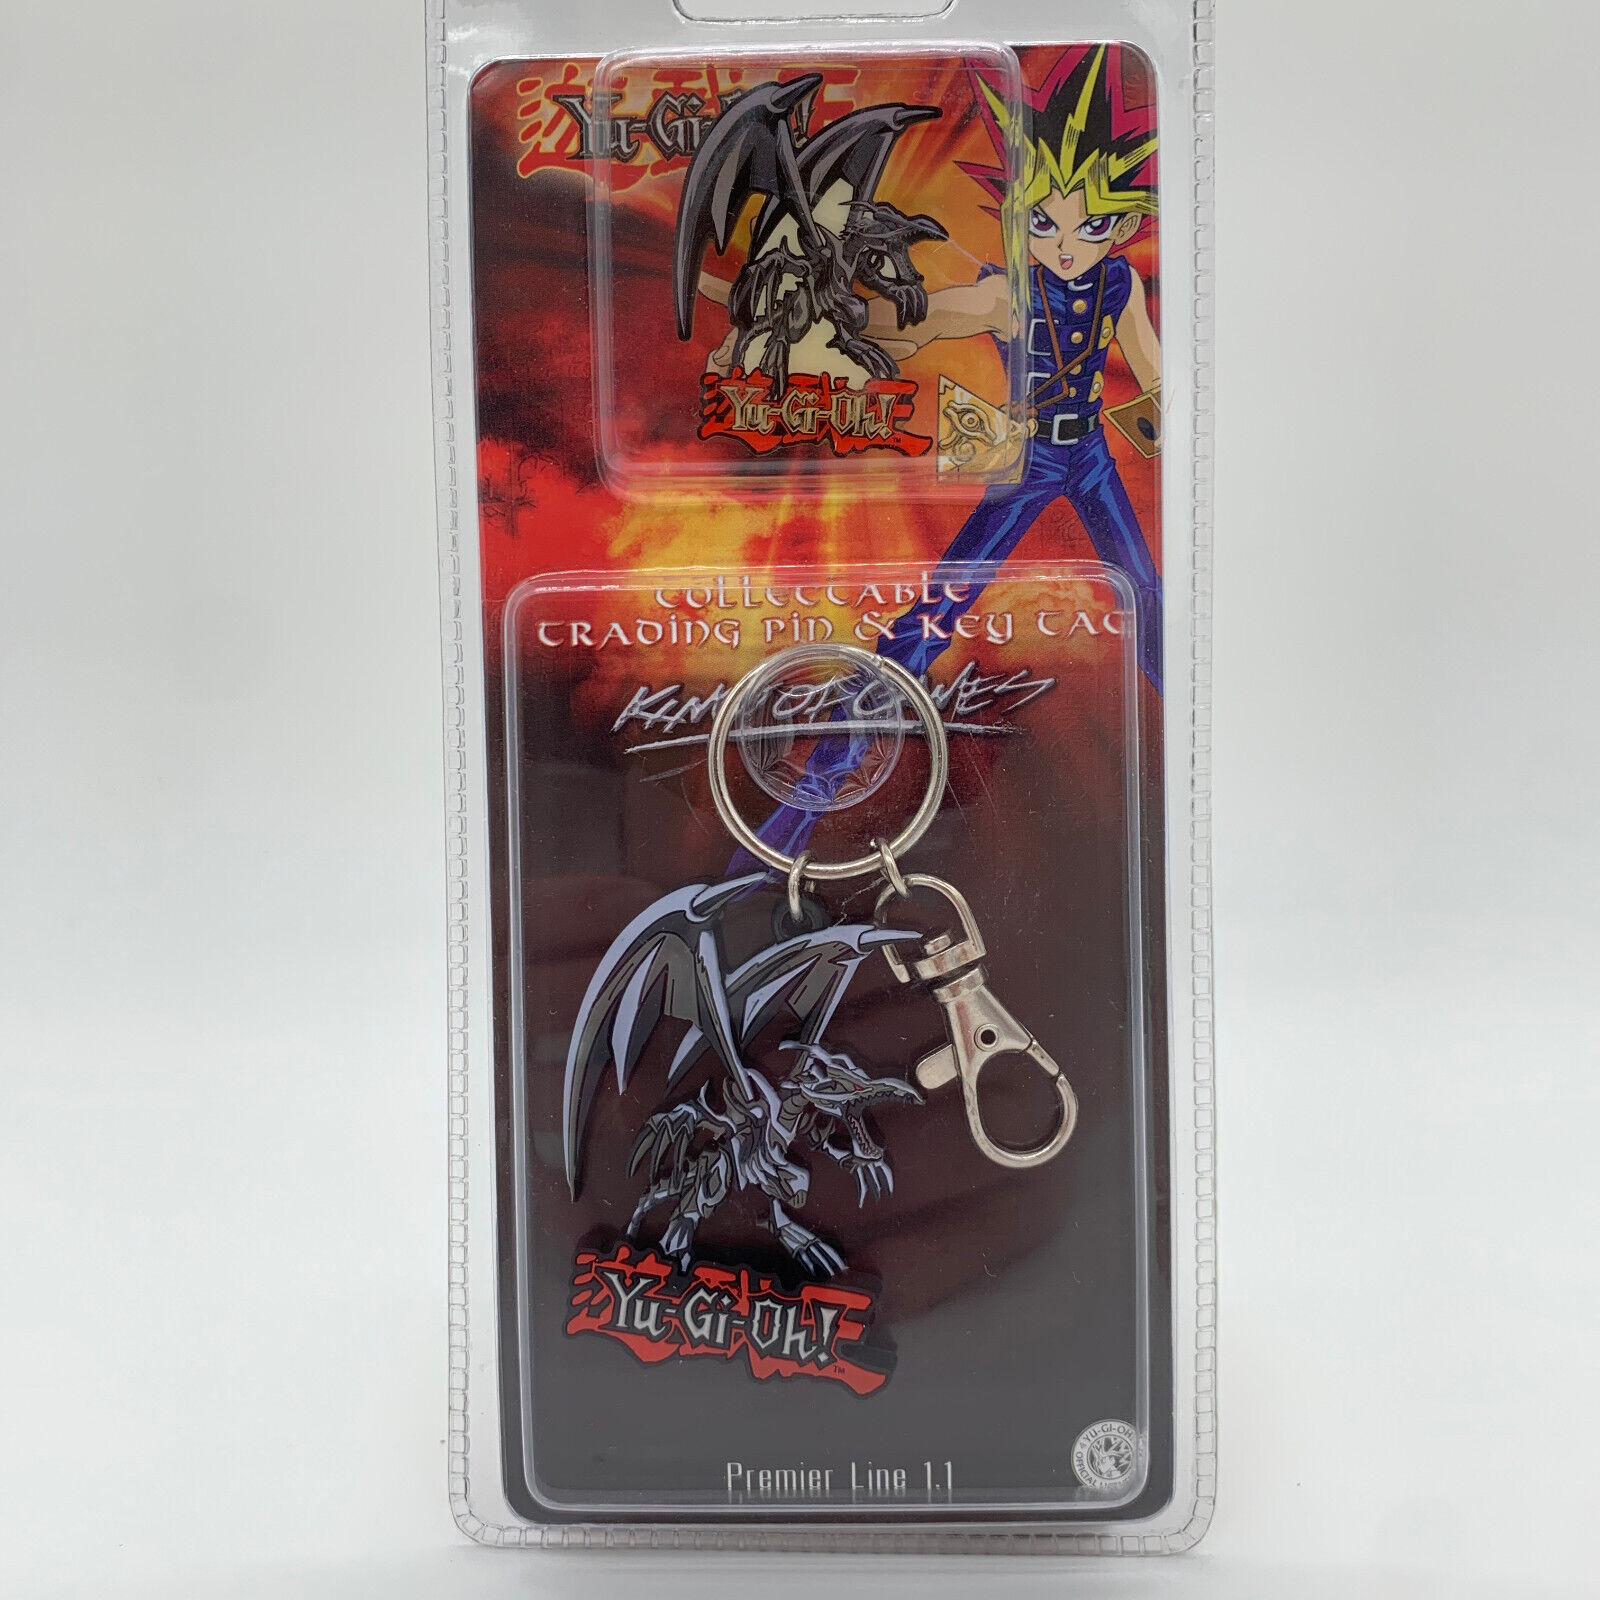 2002 Yu-Gi-Oh Red Eyes Black Dragon Collectible Trading Pin & Key Tag Keychain